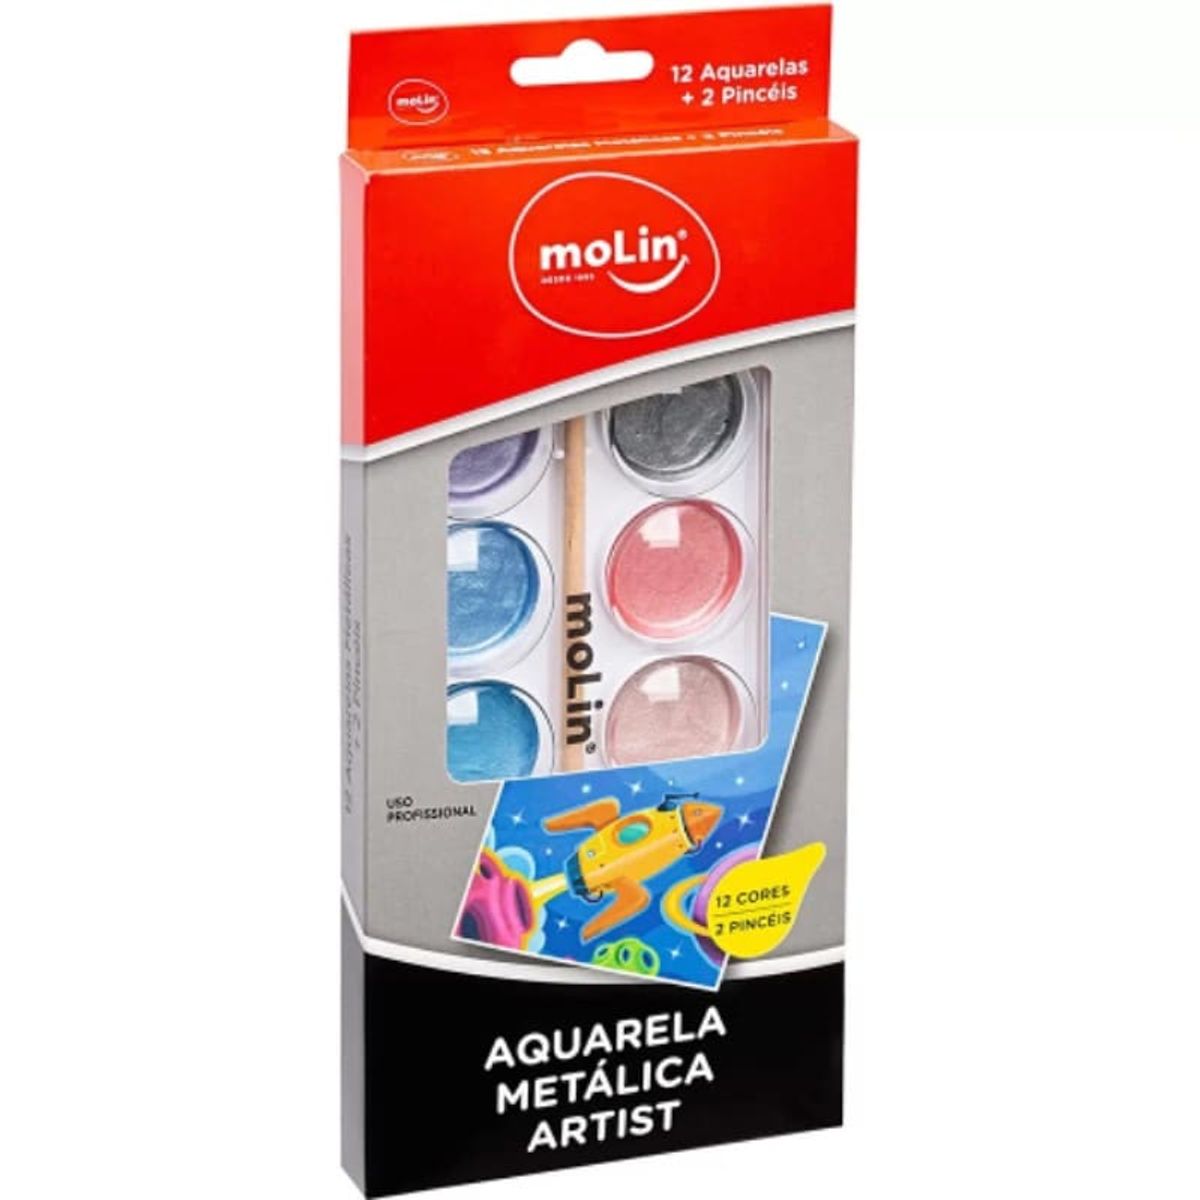 Aquarela Molin Metalica 12 Cores + Pincel image number 0